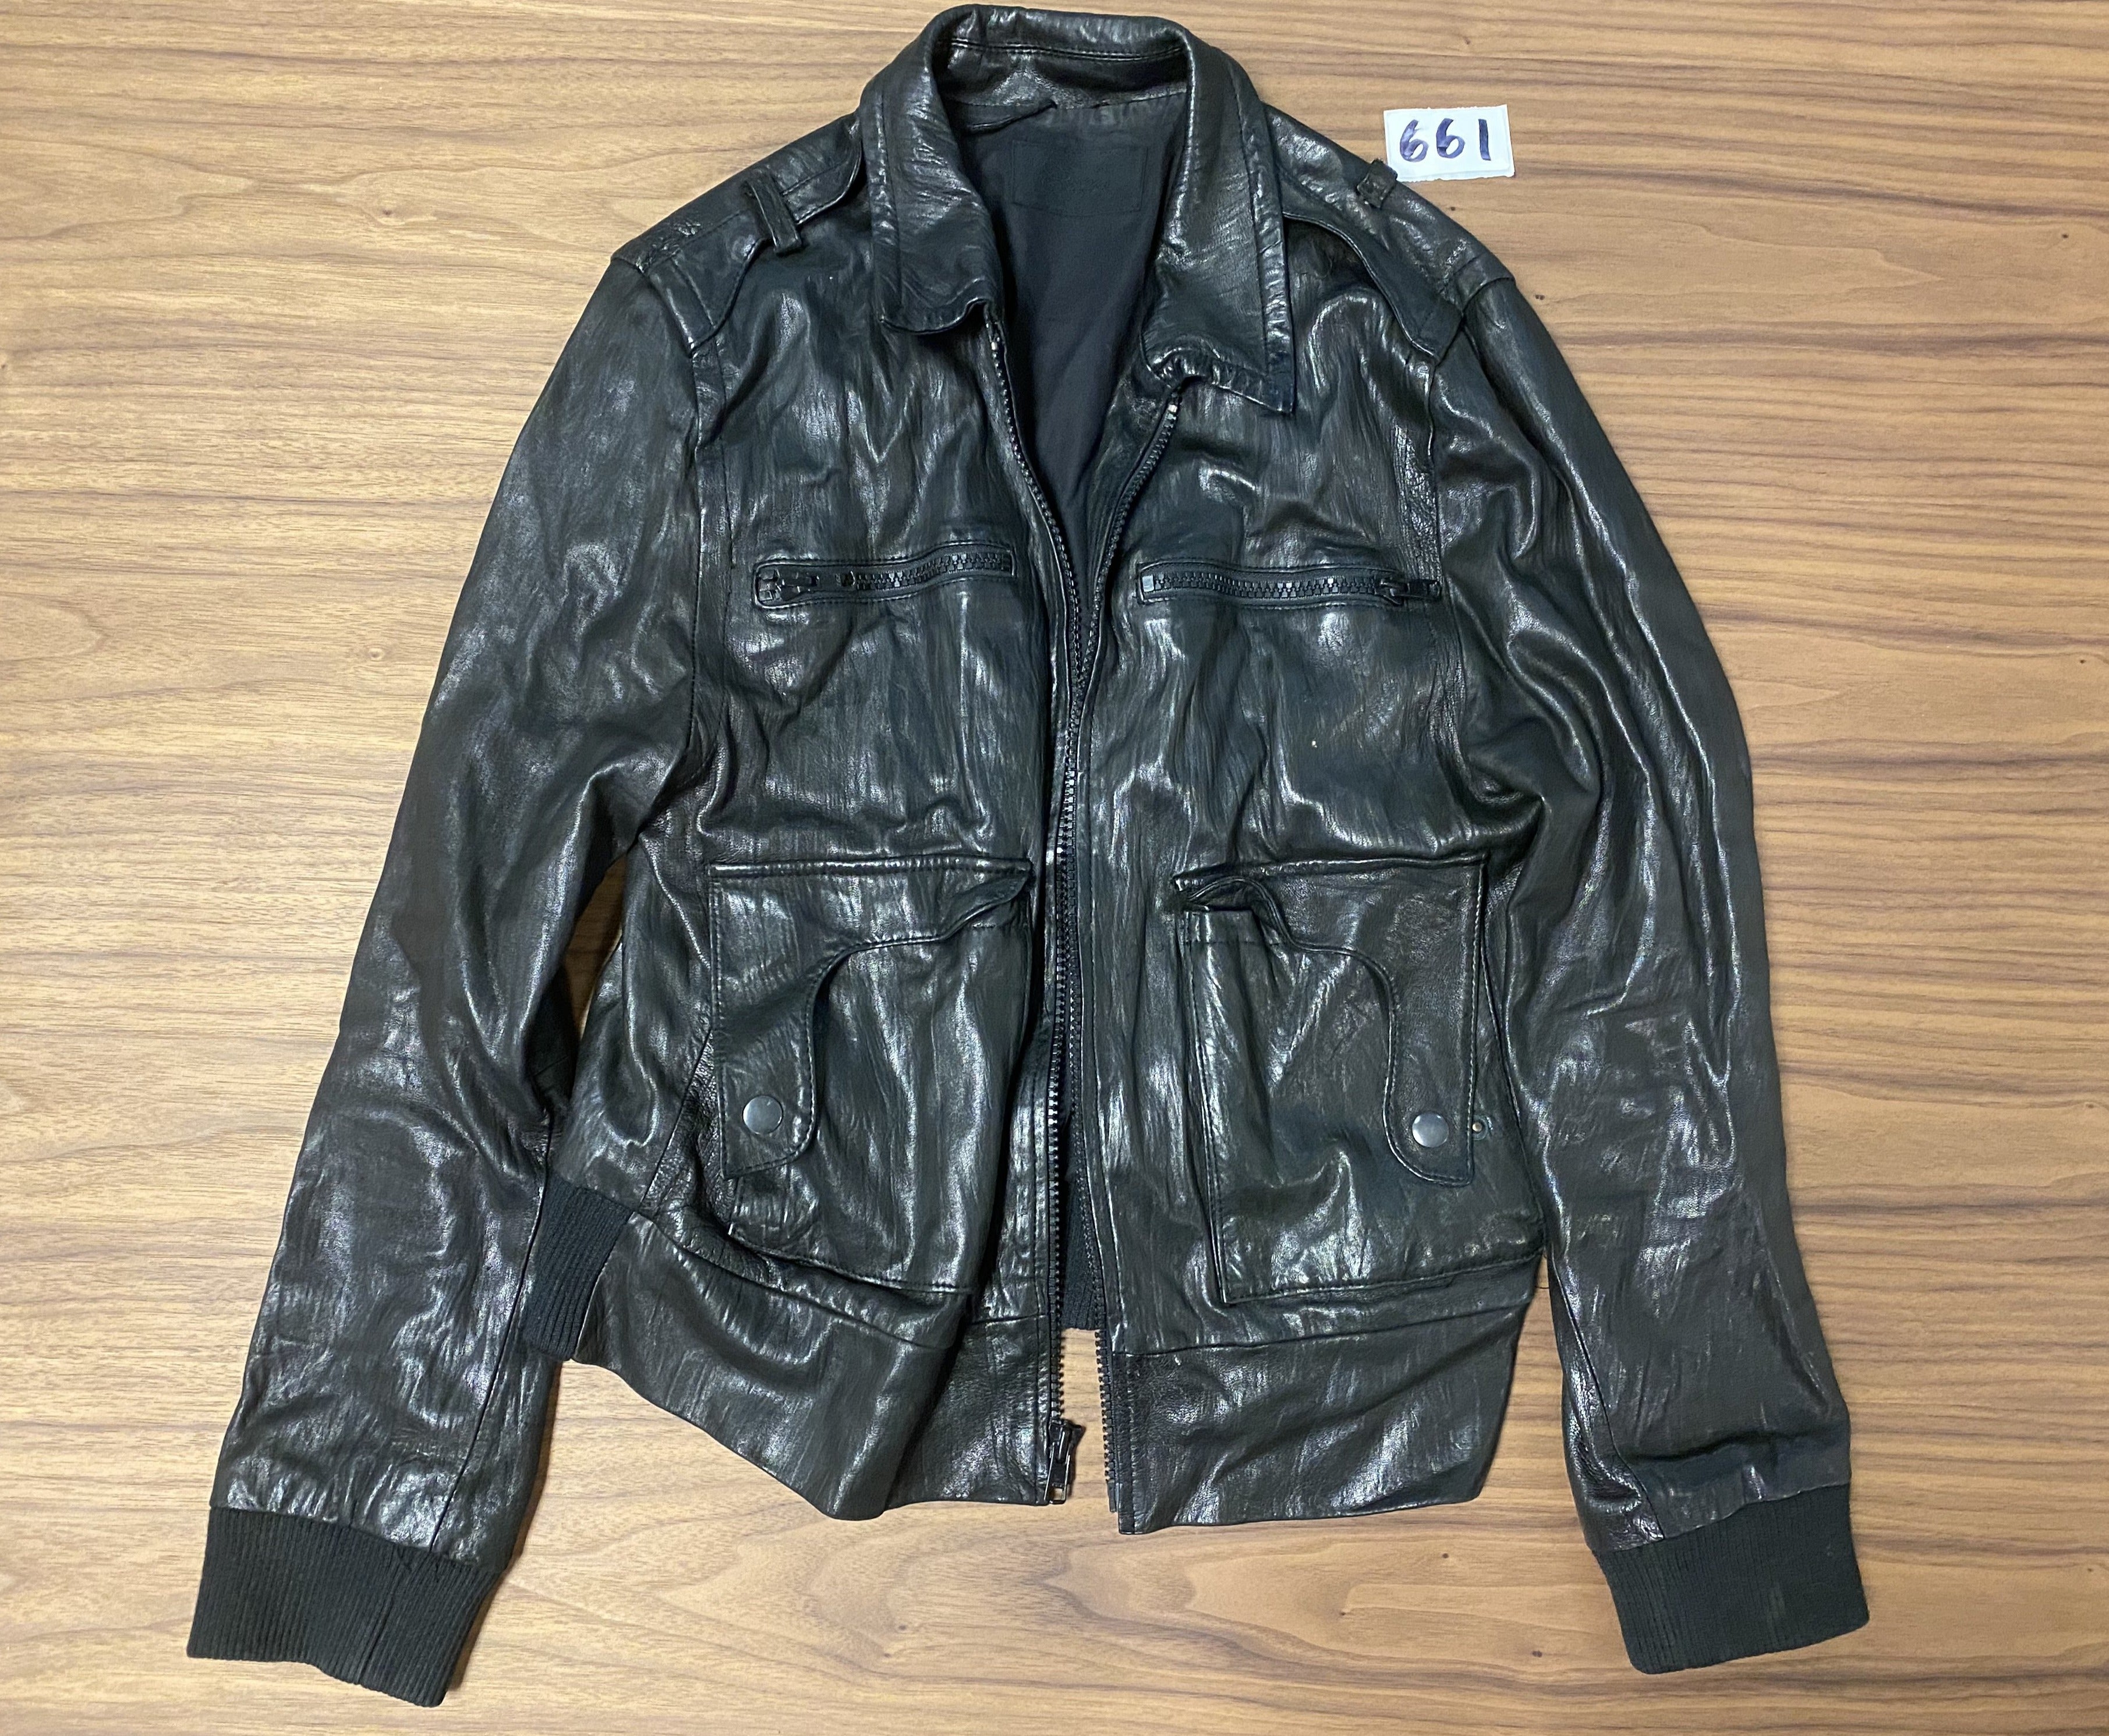 Casette  Zip Up Leather Jacket - Black